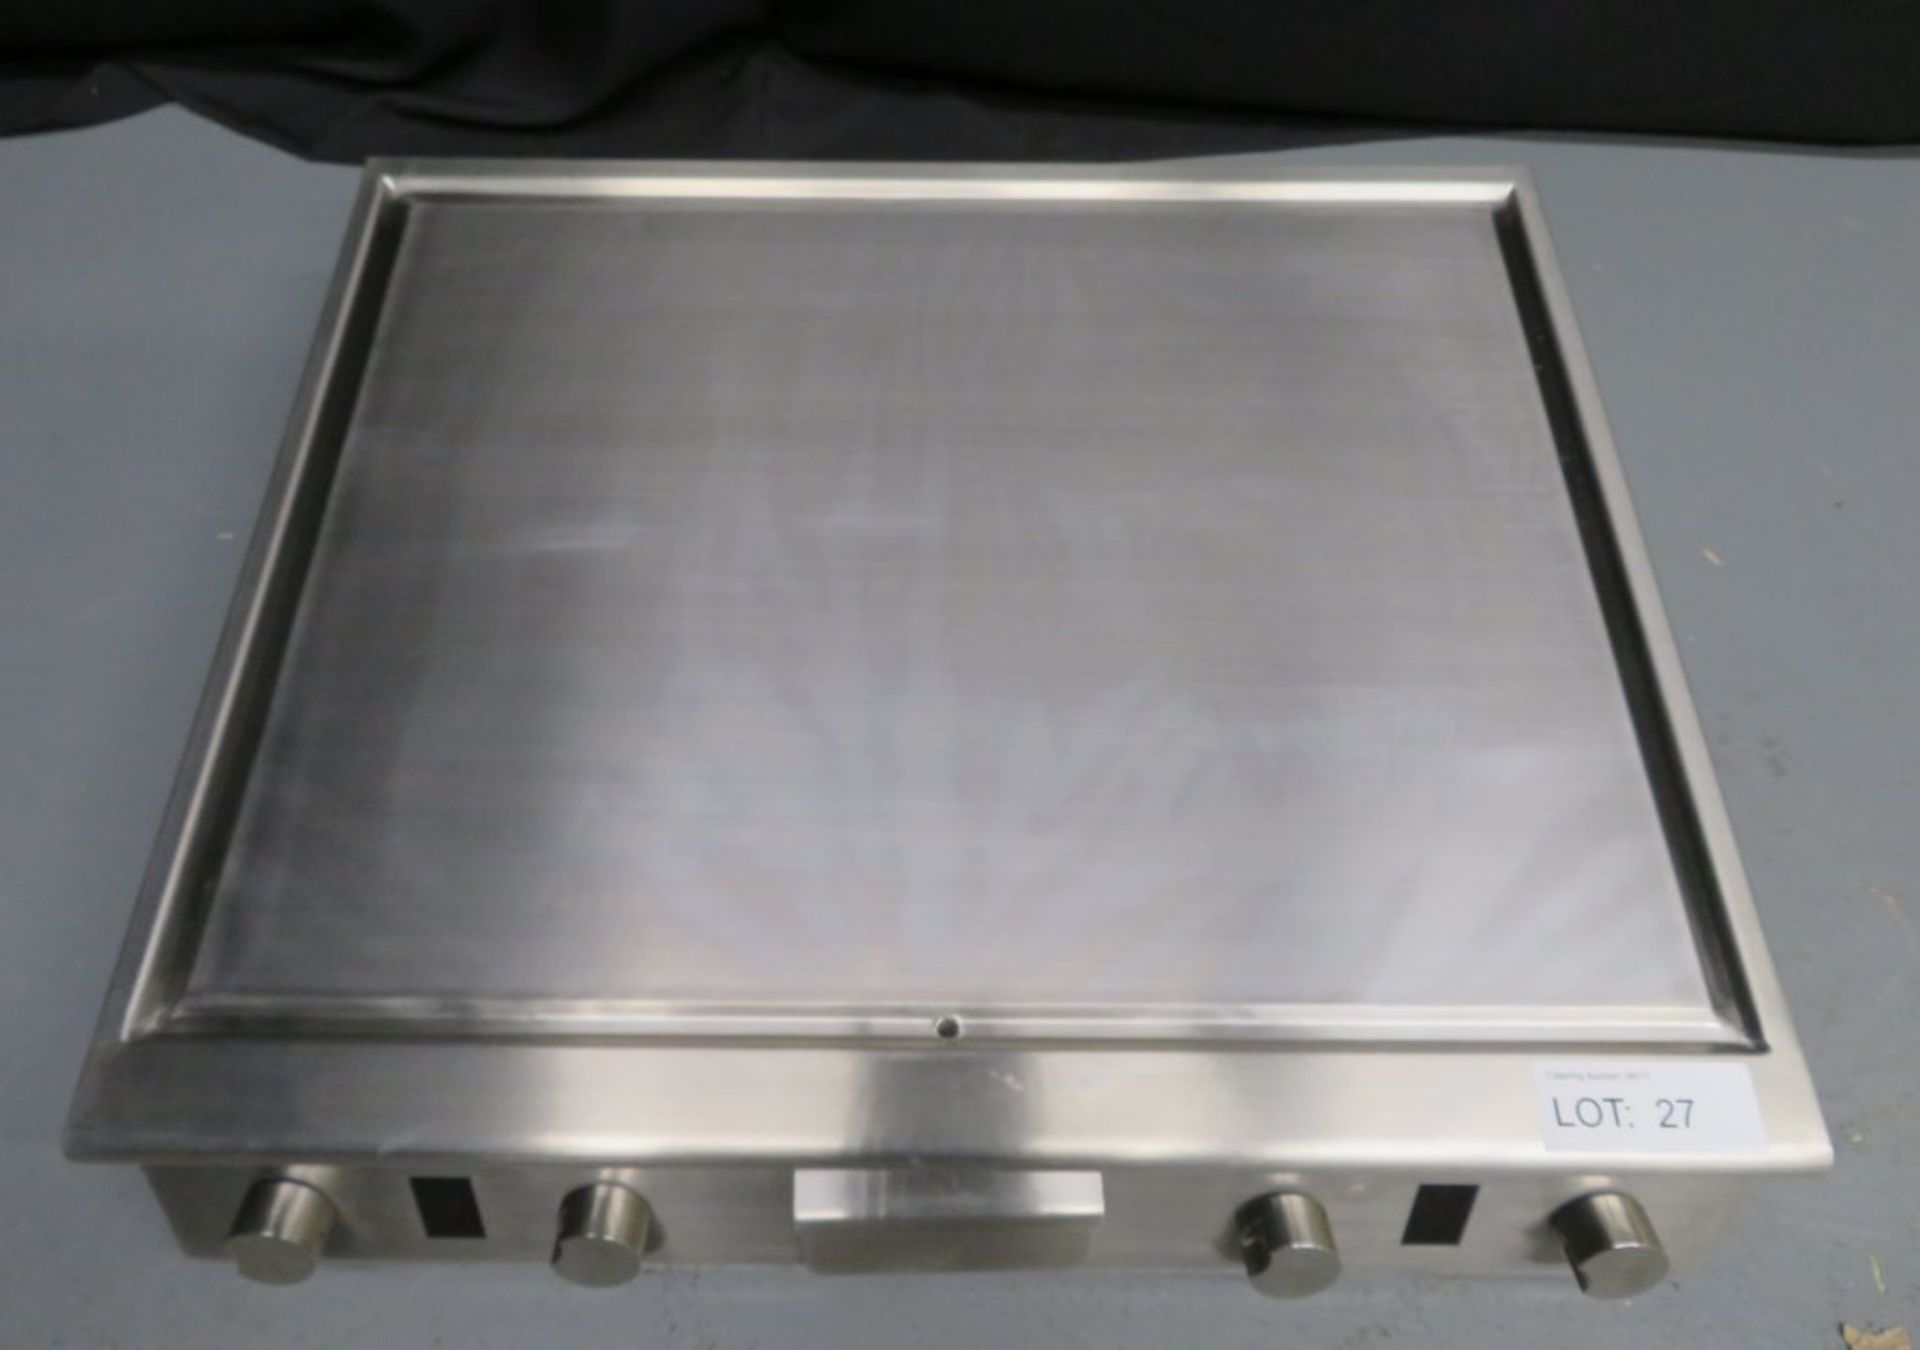 SemiPro countertop induction Teppanyaki, model RMBSTIFT70,1 phase - Image 4 of 7